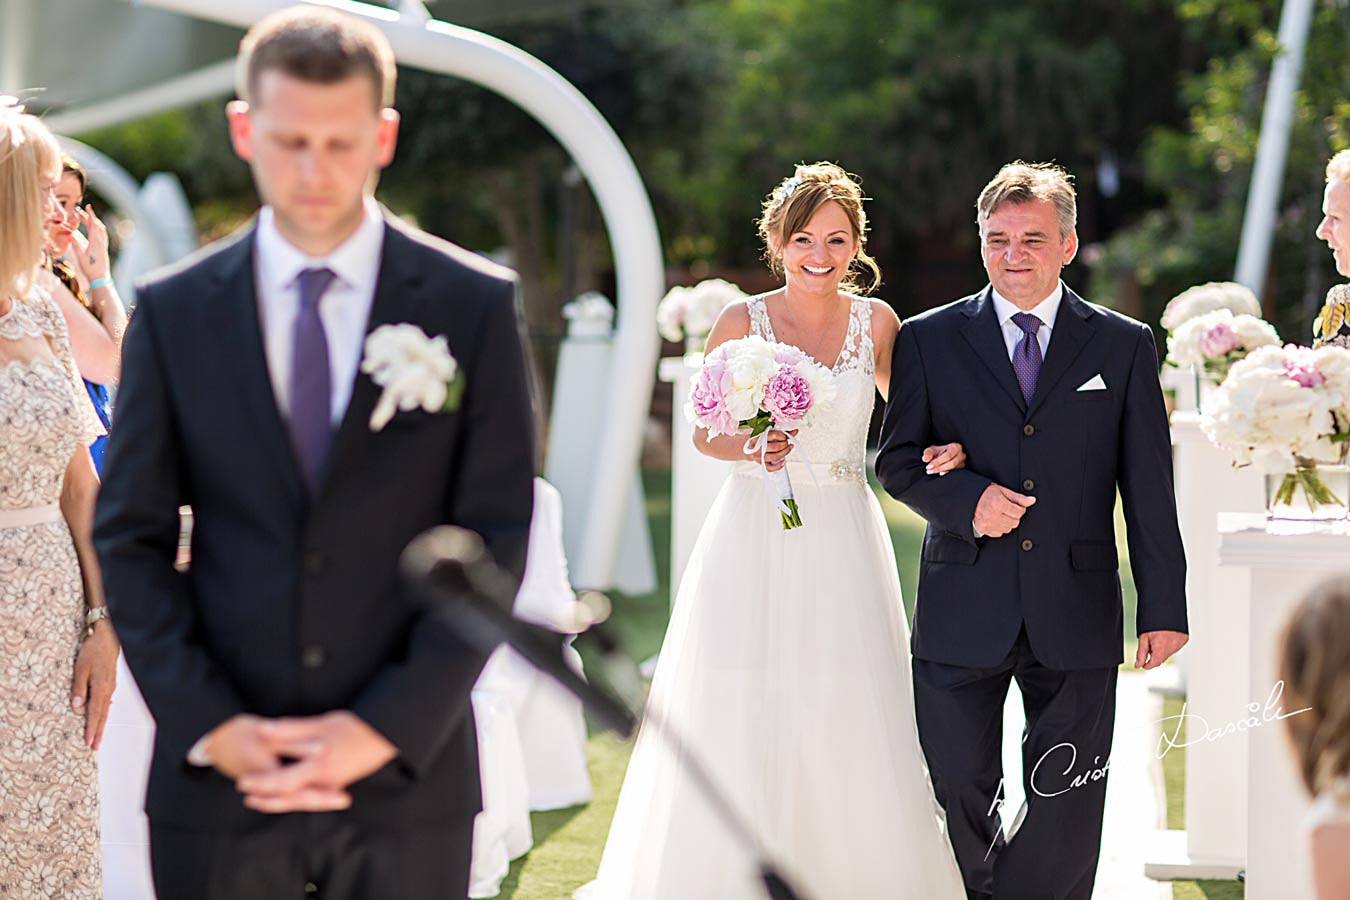 Wedding at Grecian Park Hotel in Protaras, Cyprus. Photographer: Cristian Dascalu